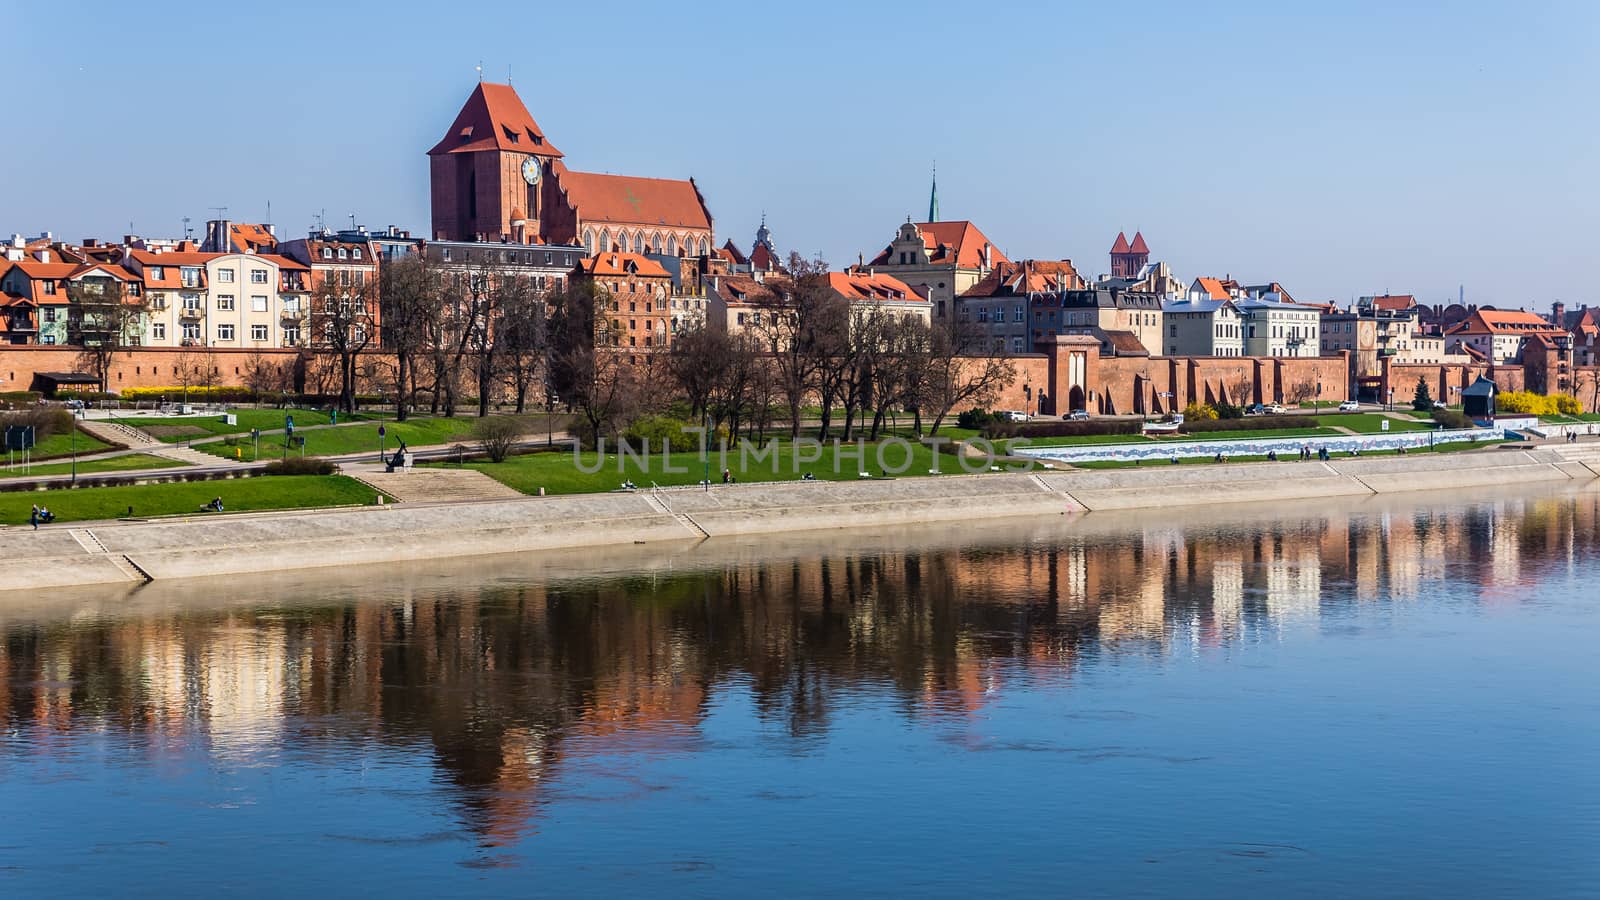 Panoramic view of the old town of Torun by pawel_szczepanski